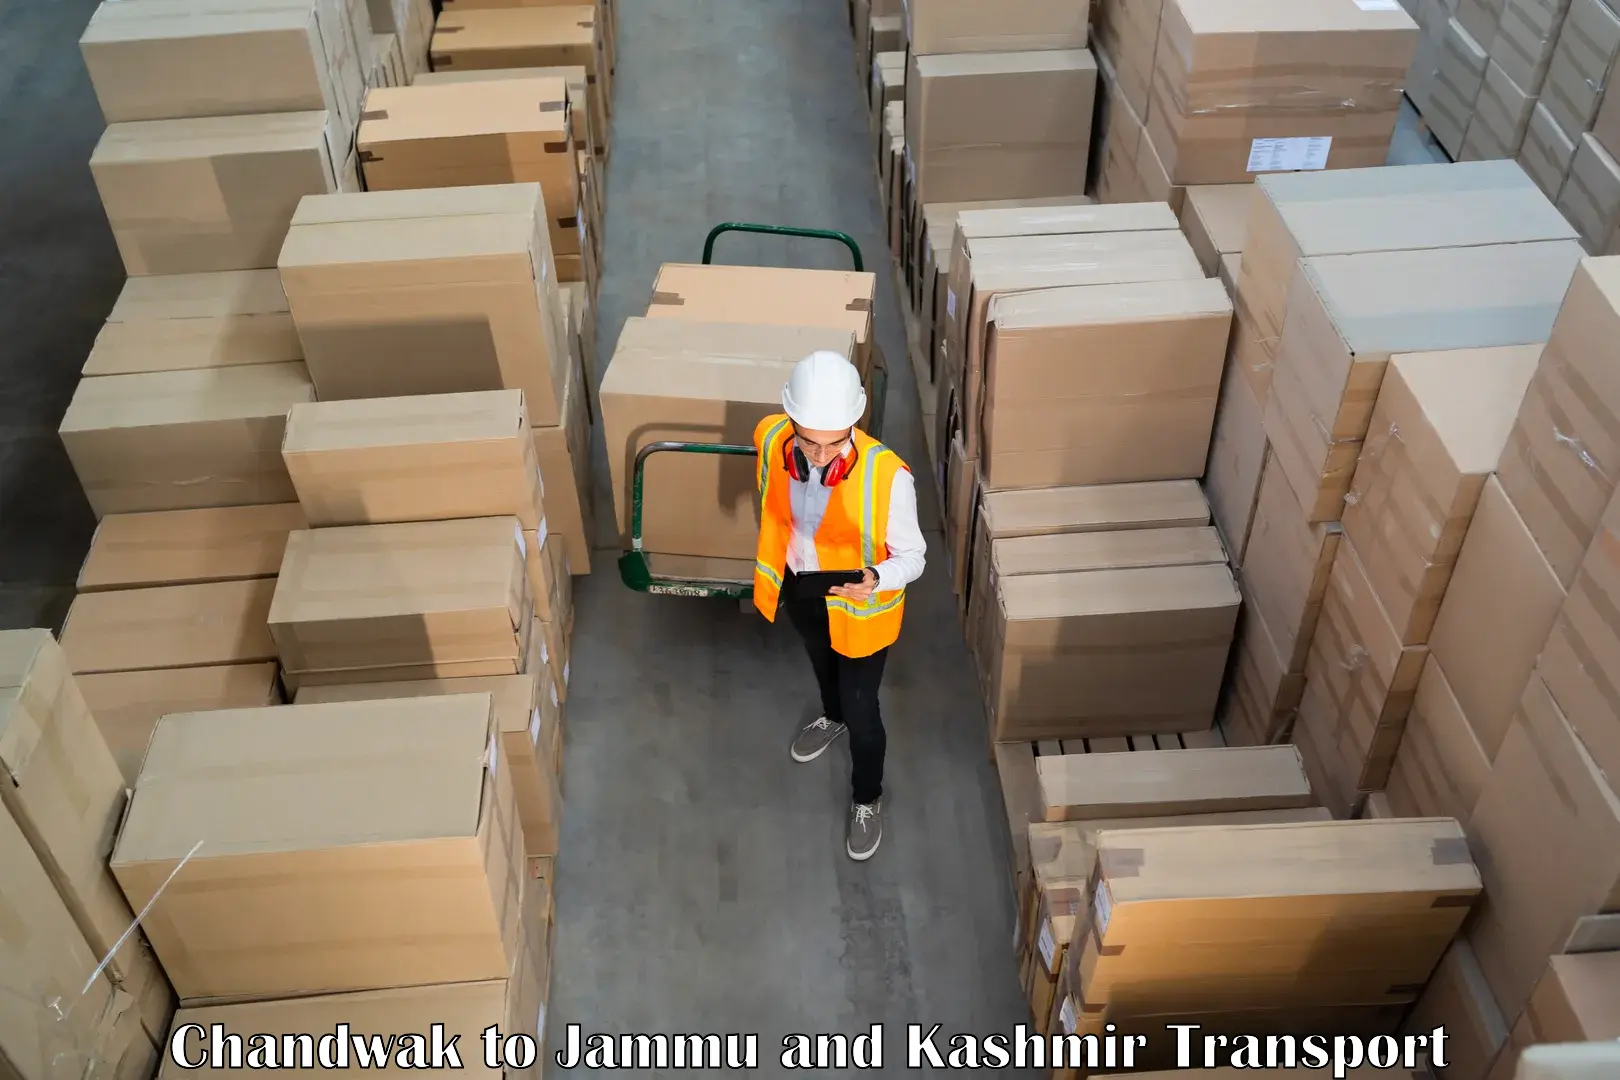 Transport shared services Chandwak to Jammu and Kashmir